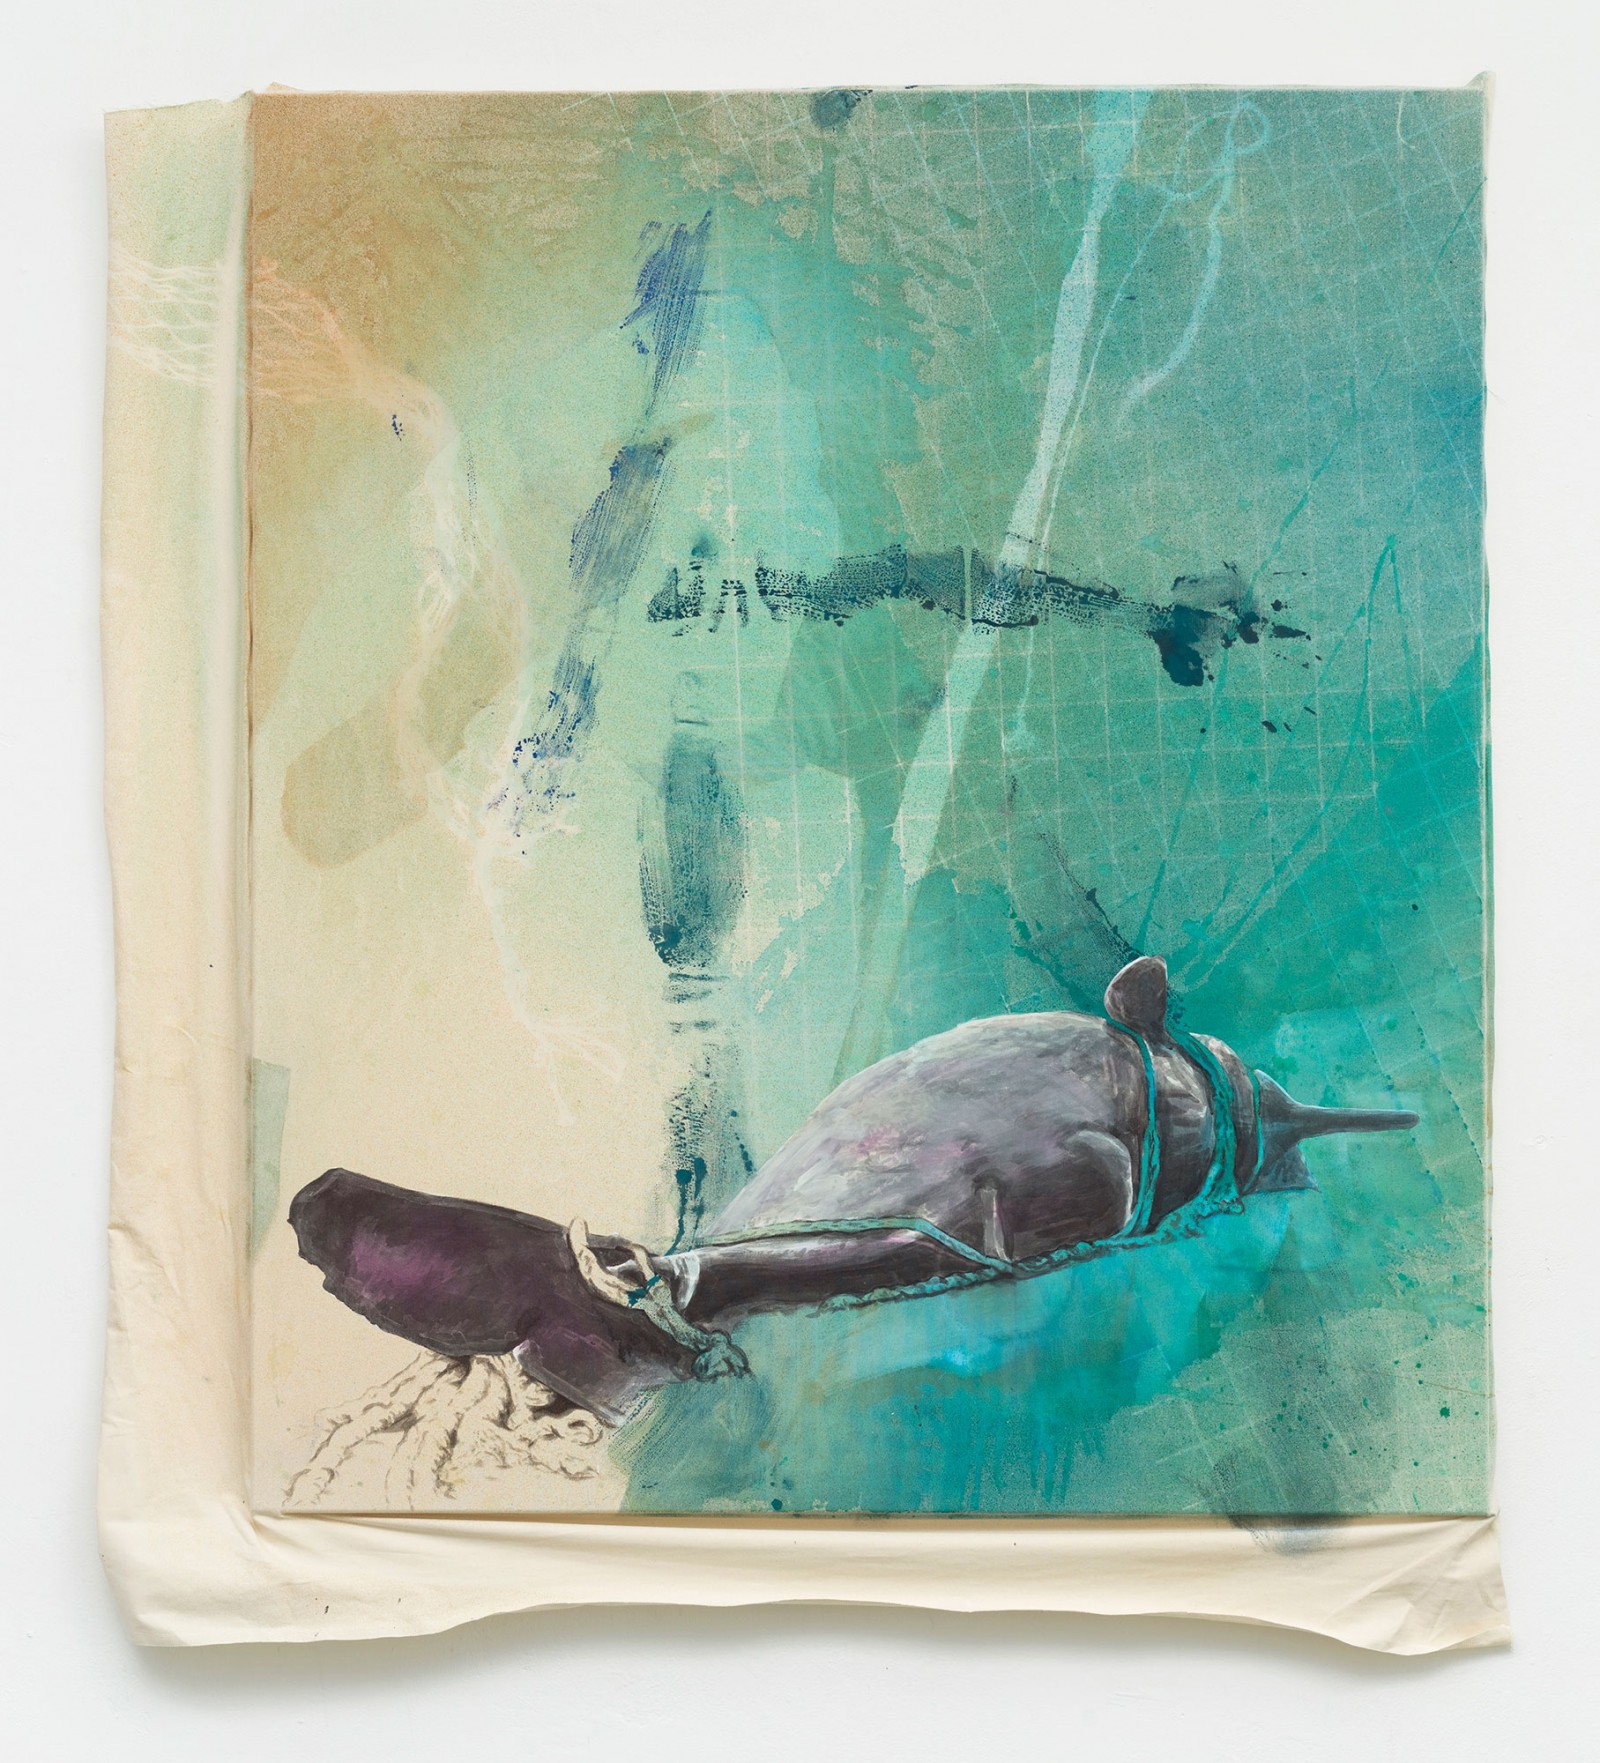 Kim Nekarda: marooned in daylight, 2020, vinyl color & body print on cotton, 166 x 138 x 17 cm